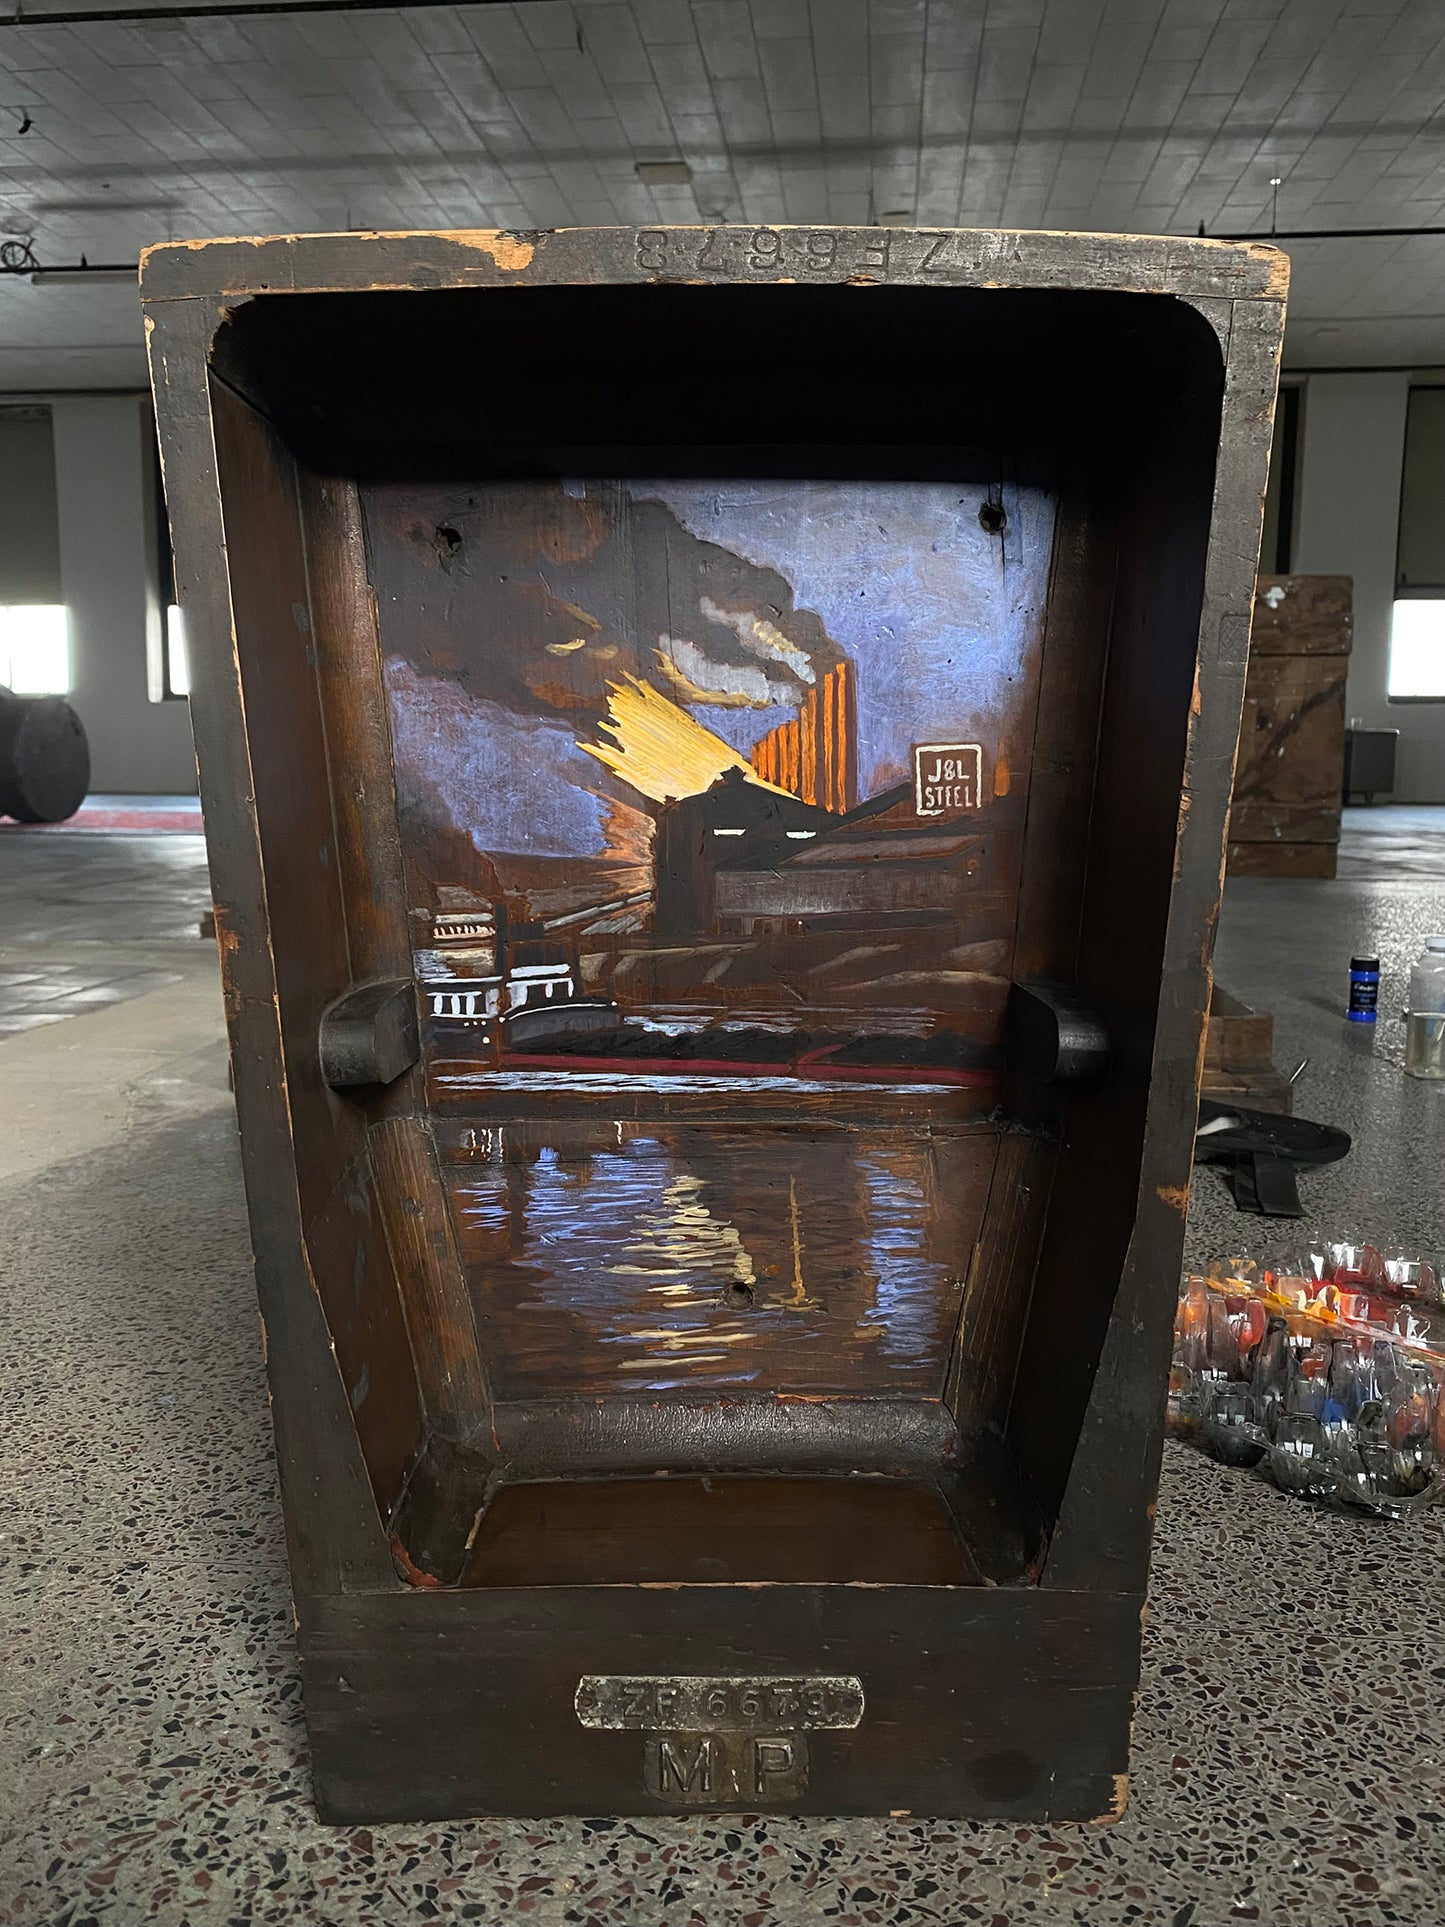 J&L Core Box Painting - 24h x 16w x 6d inches